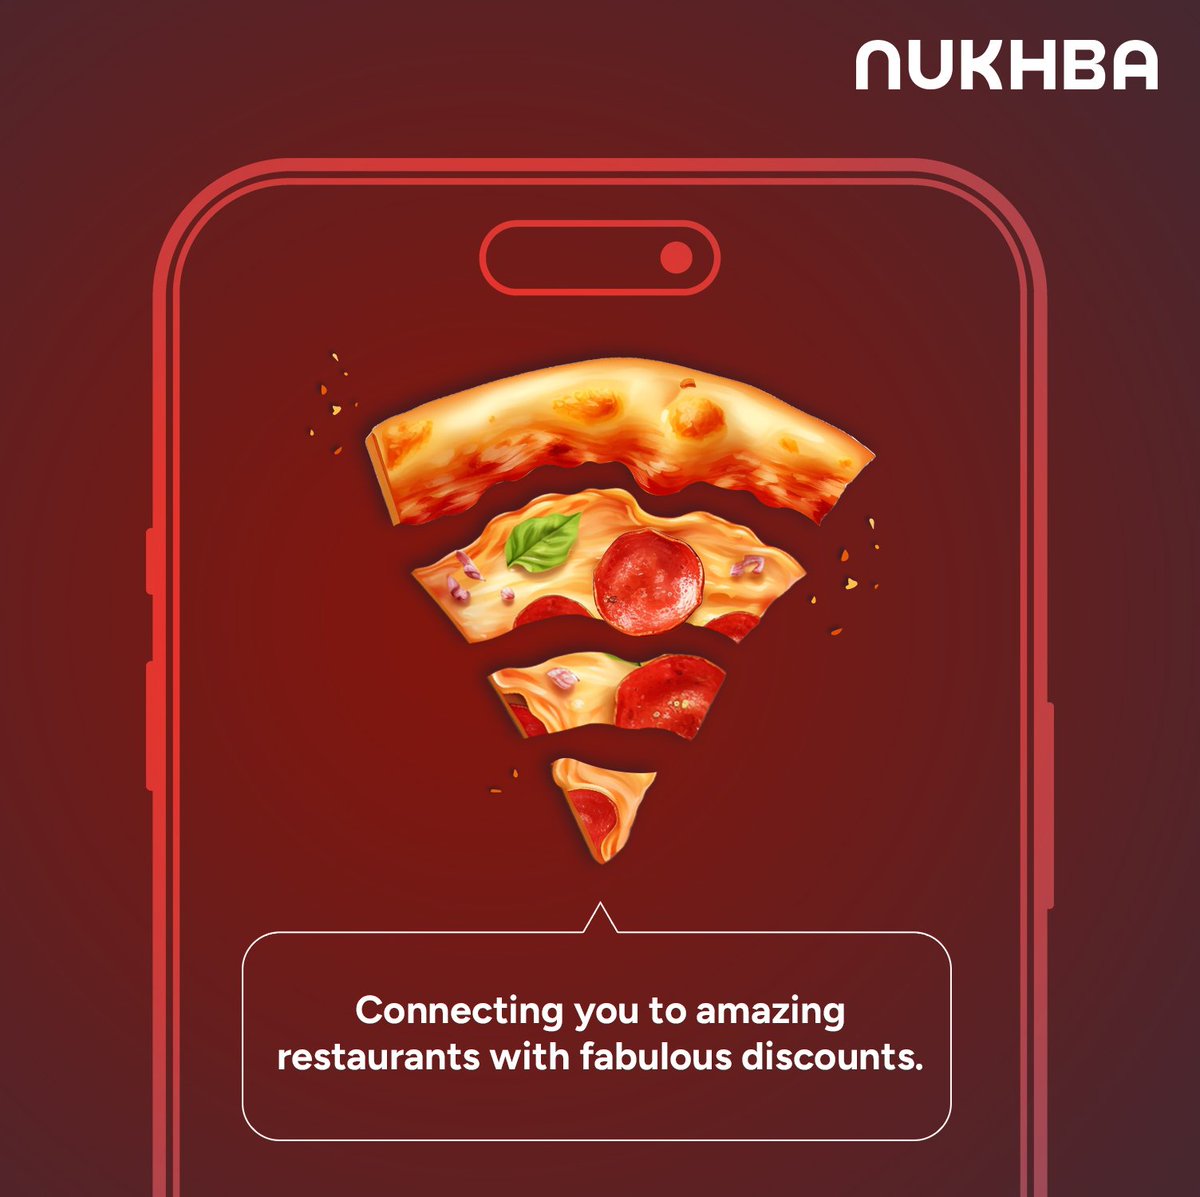 Experience the magic of connecting with Nukhba! Discover your favorite restaurants and unlock exclusive discounts all at your fingertips. 

#nukhba #nukhbaApp #dubairestaurants #dubaieats #dubaifood #finediningdubai #restaurantsindubai #visitdubai #mydubai #dubaifoodie